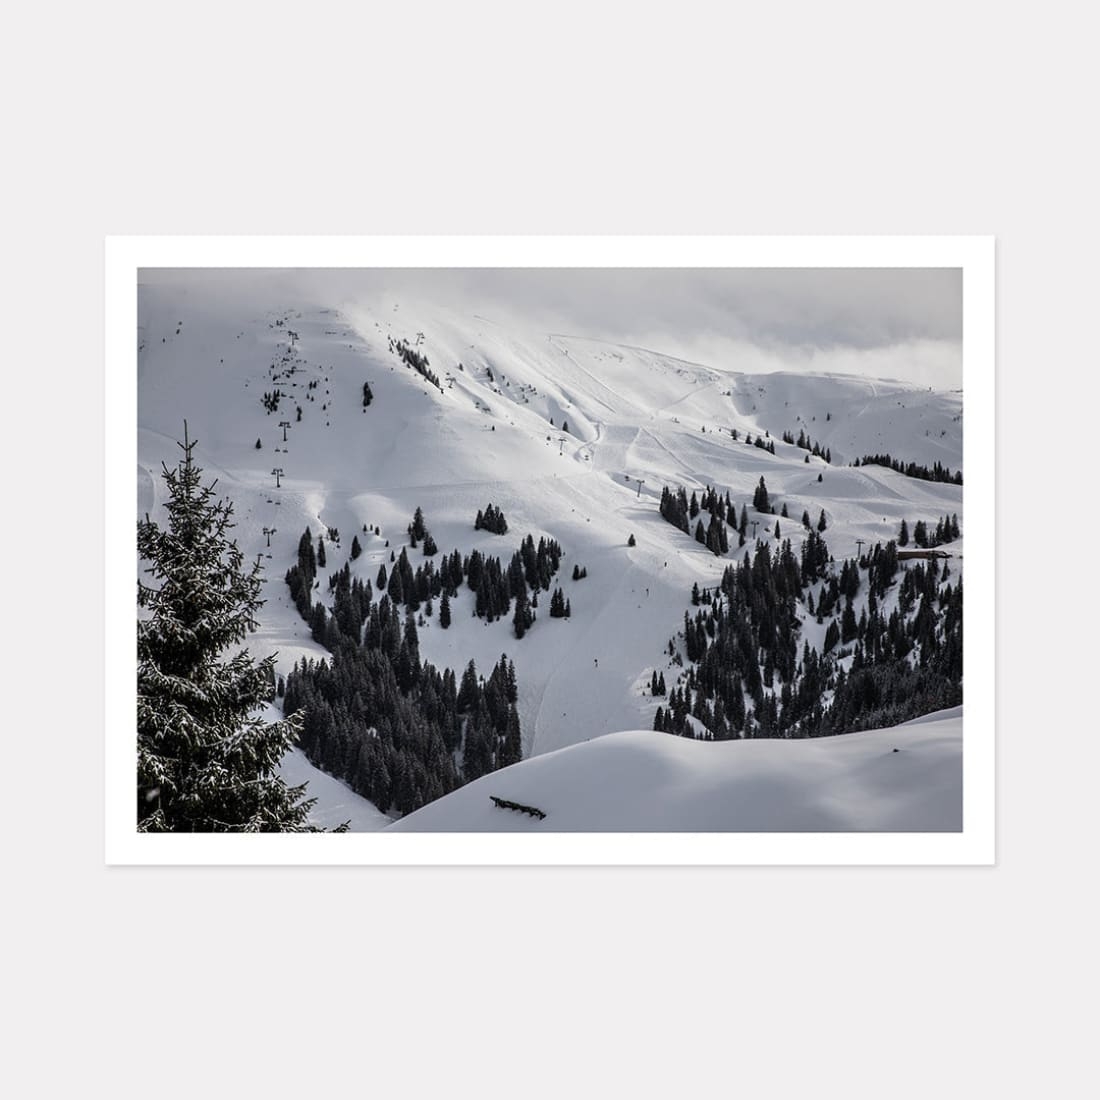 Kitzbuel Mountain Art Print, A3 (42cm x 29.7cm) unframed print – Powderhound